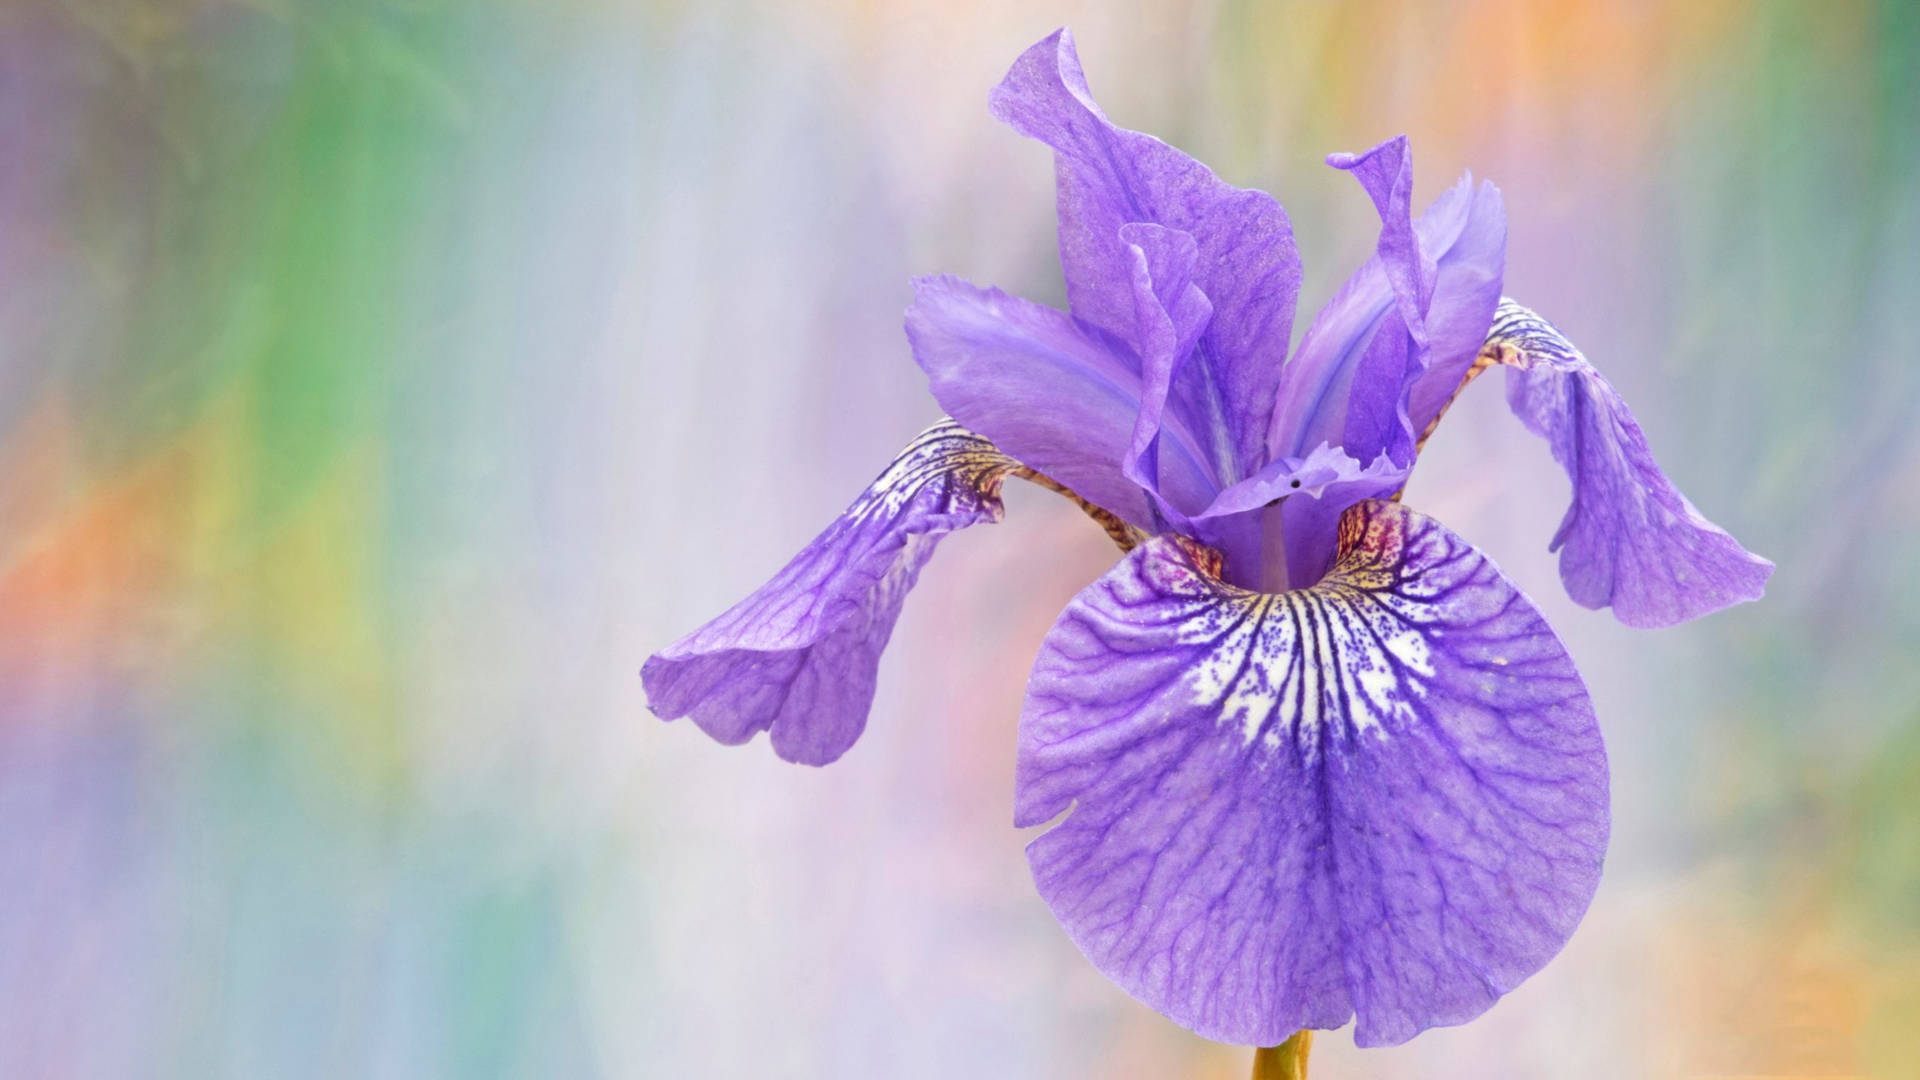 Caption: Vibrant Blooming Siberian Iris Flower